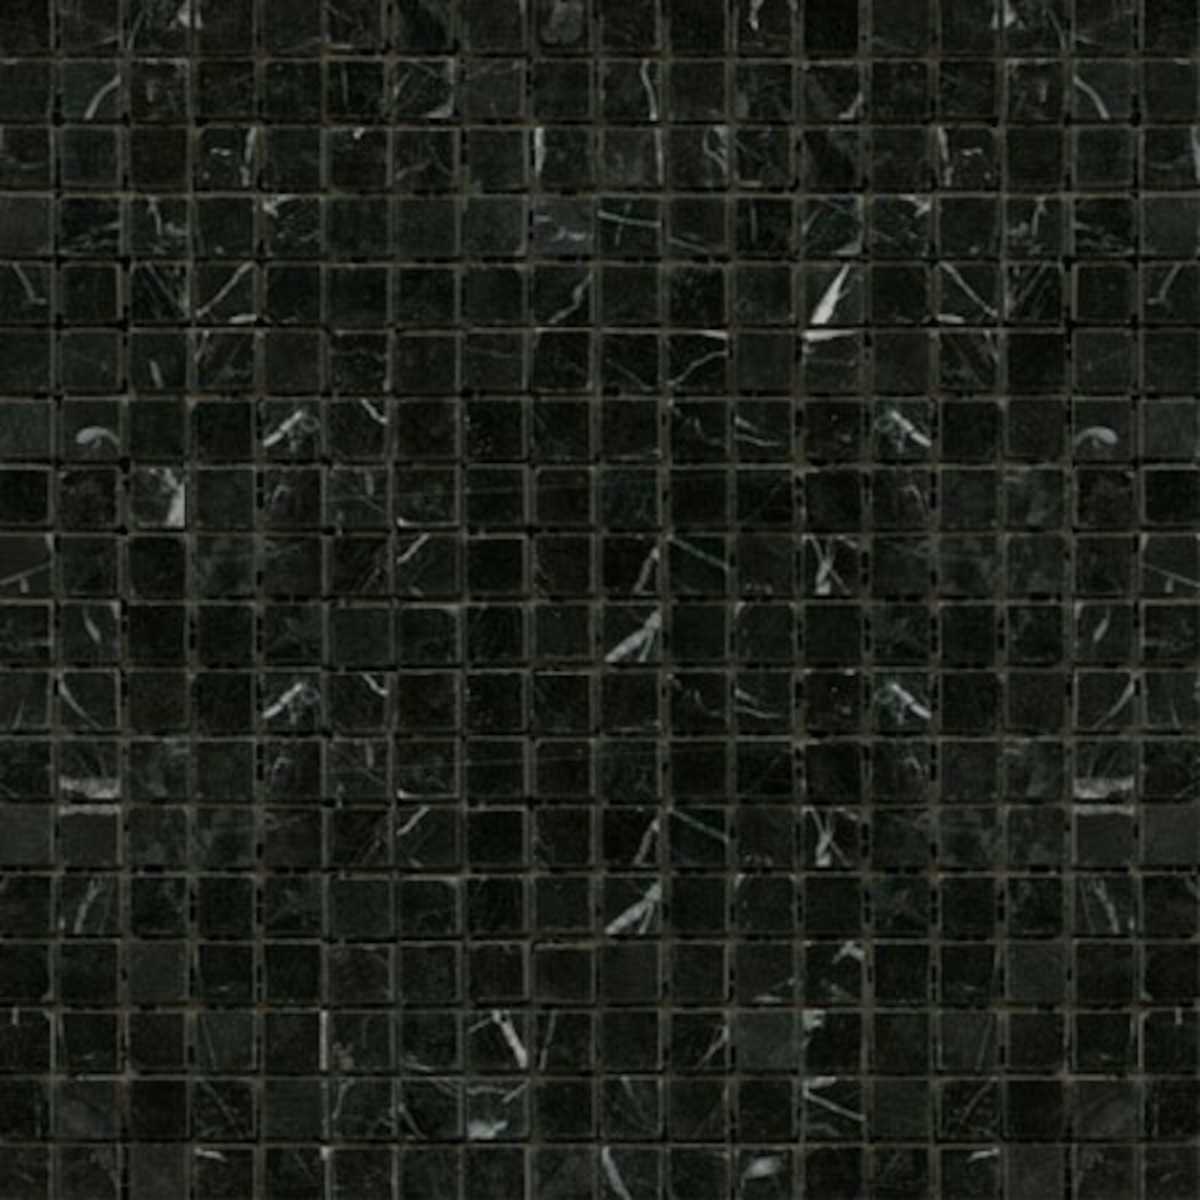 Kamenná mozaika Premium Mosaic Stone černá 30x30 cm leštěná STMOS15BKP Premium Mosaic Stone